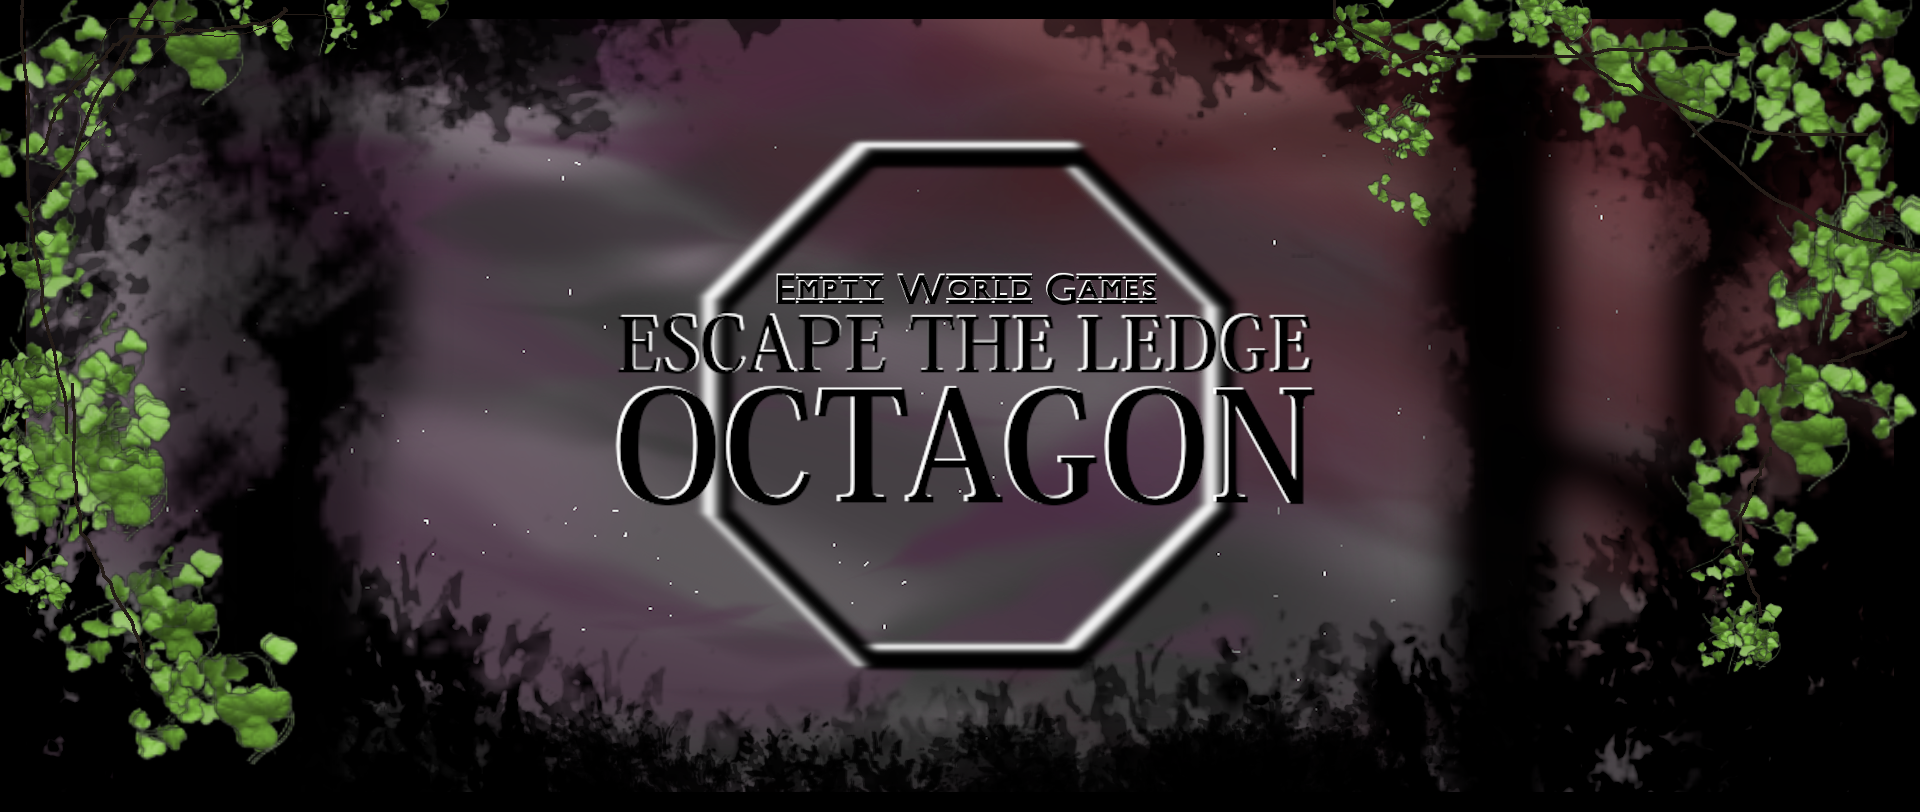 octagon windows games download